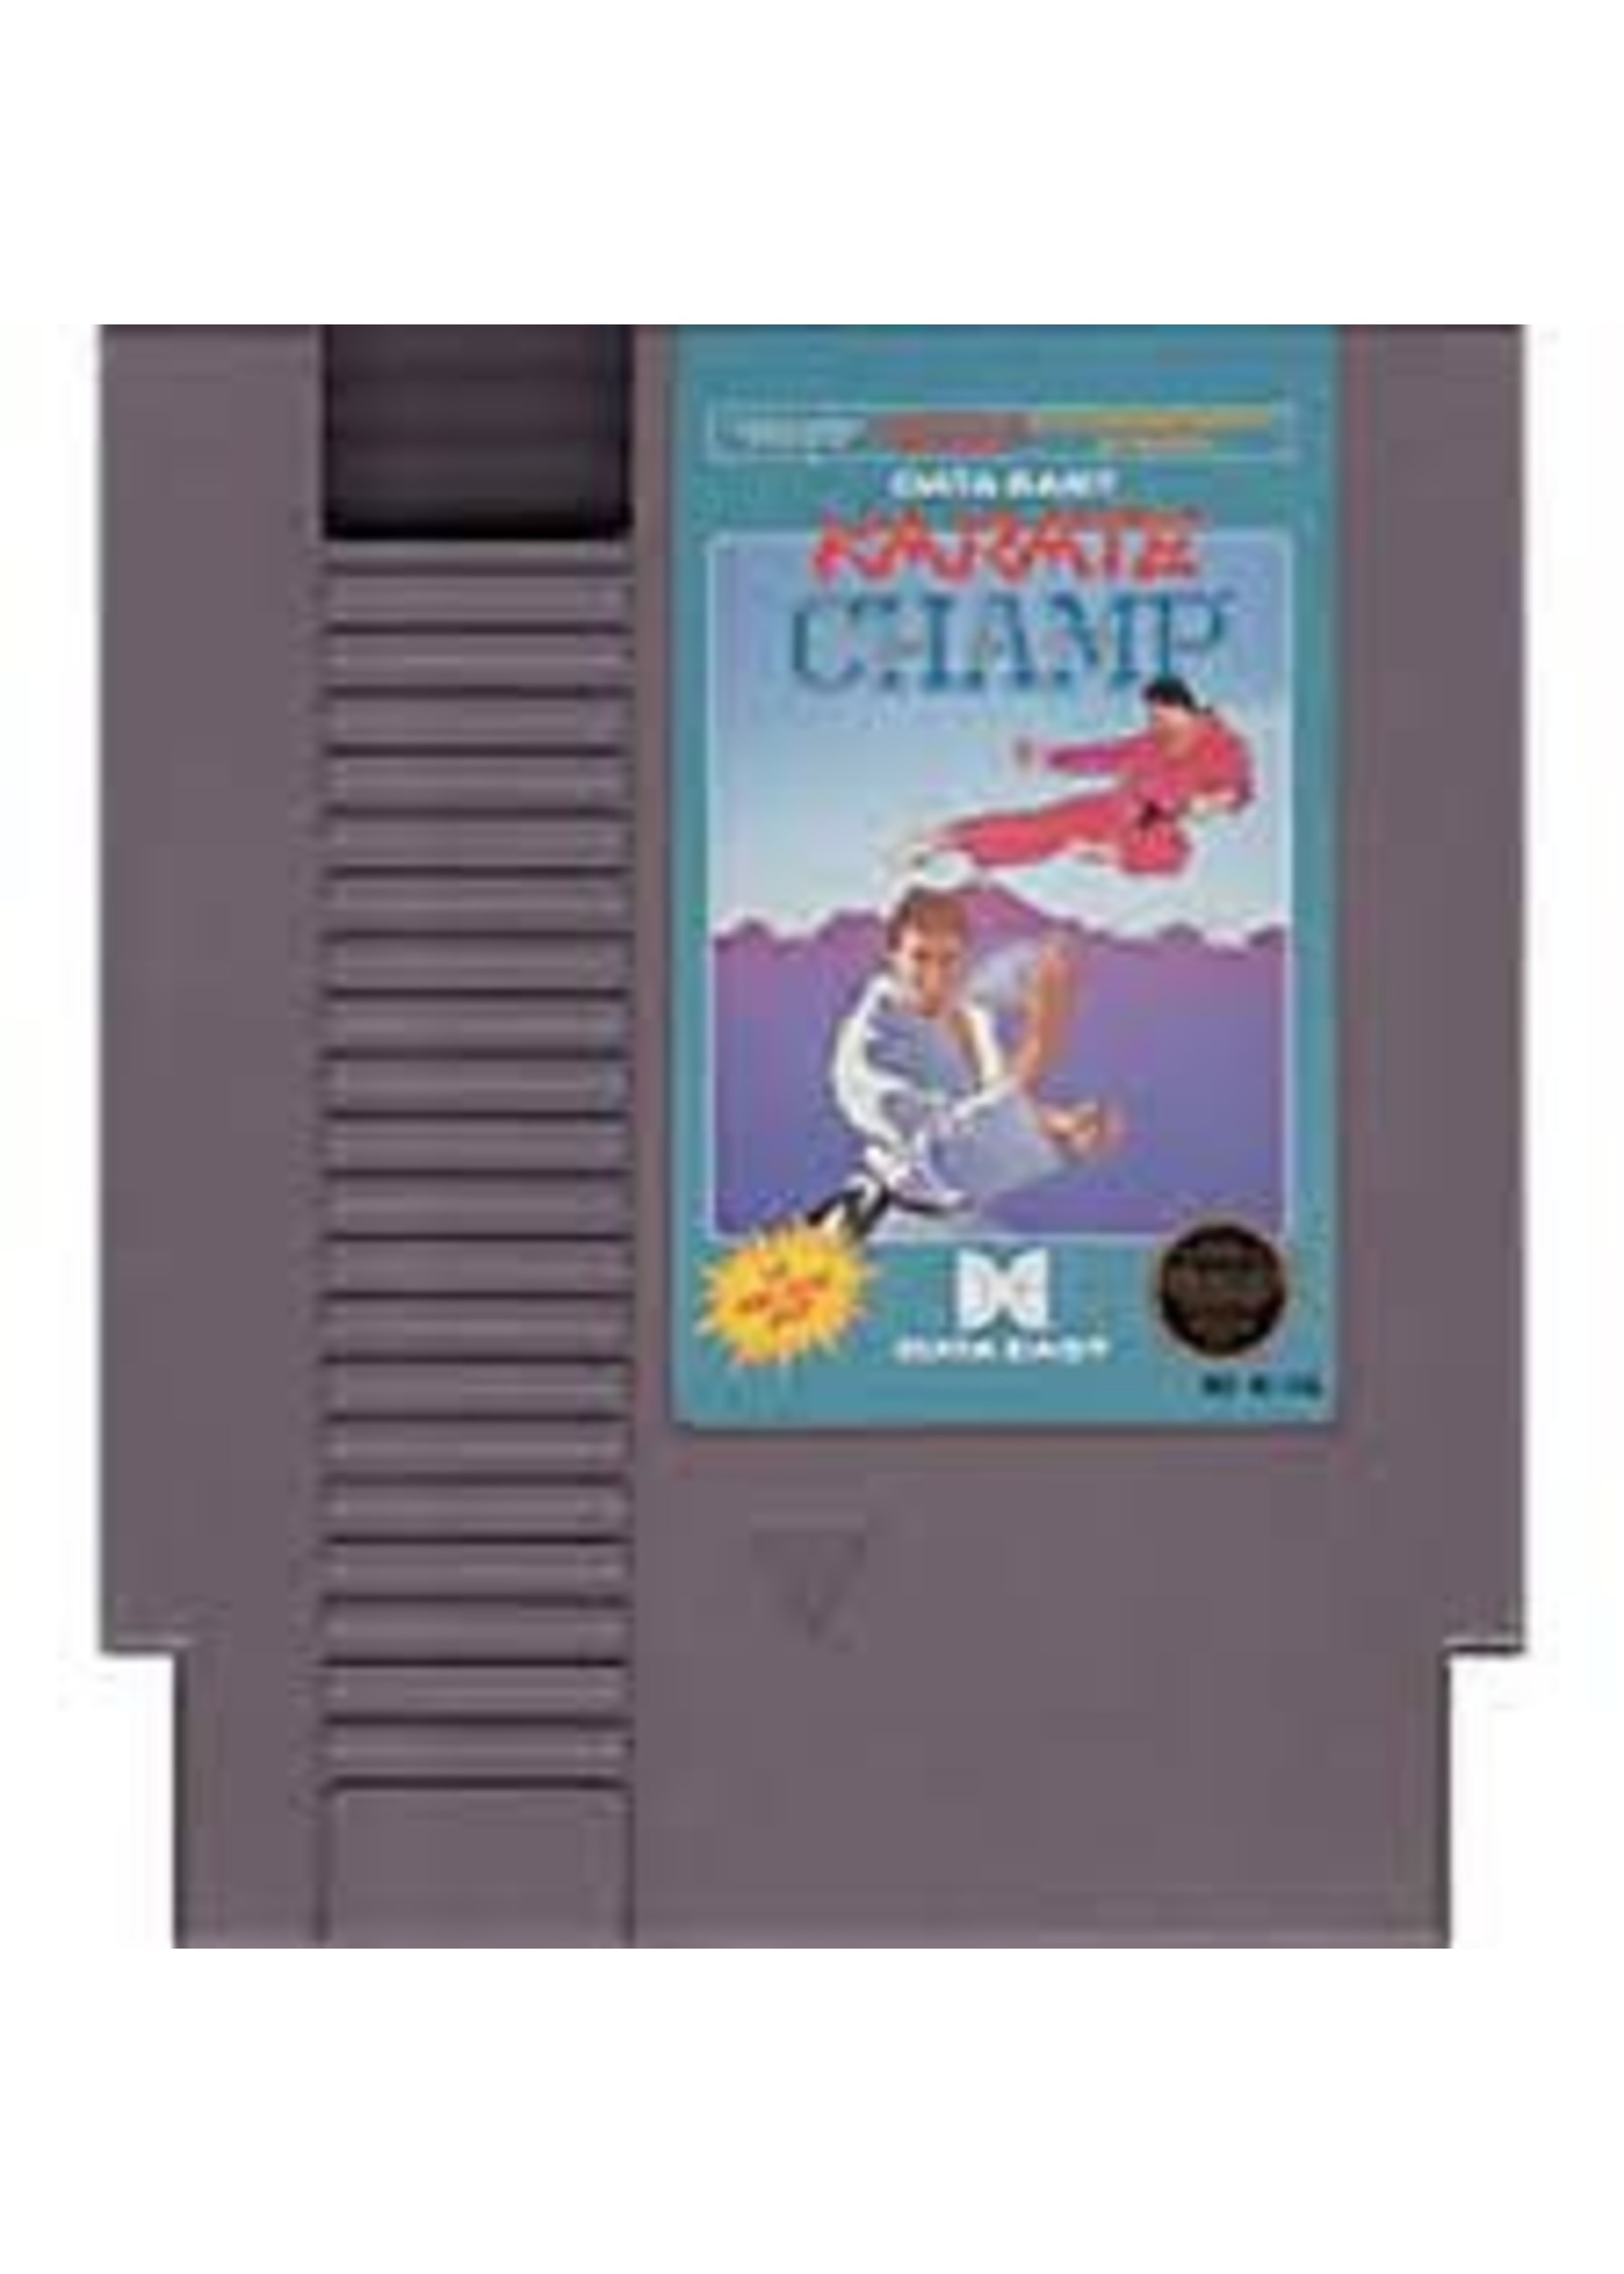 Nintendo (NES) Karate Champ